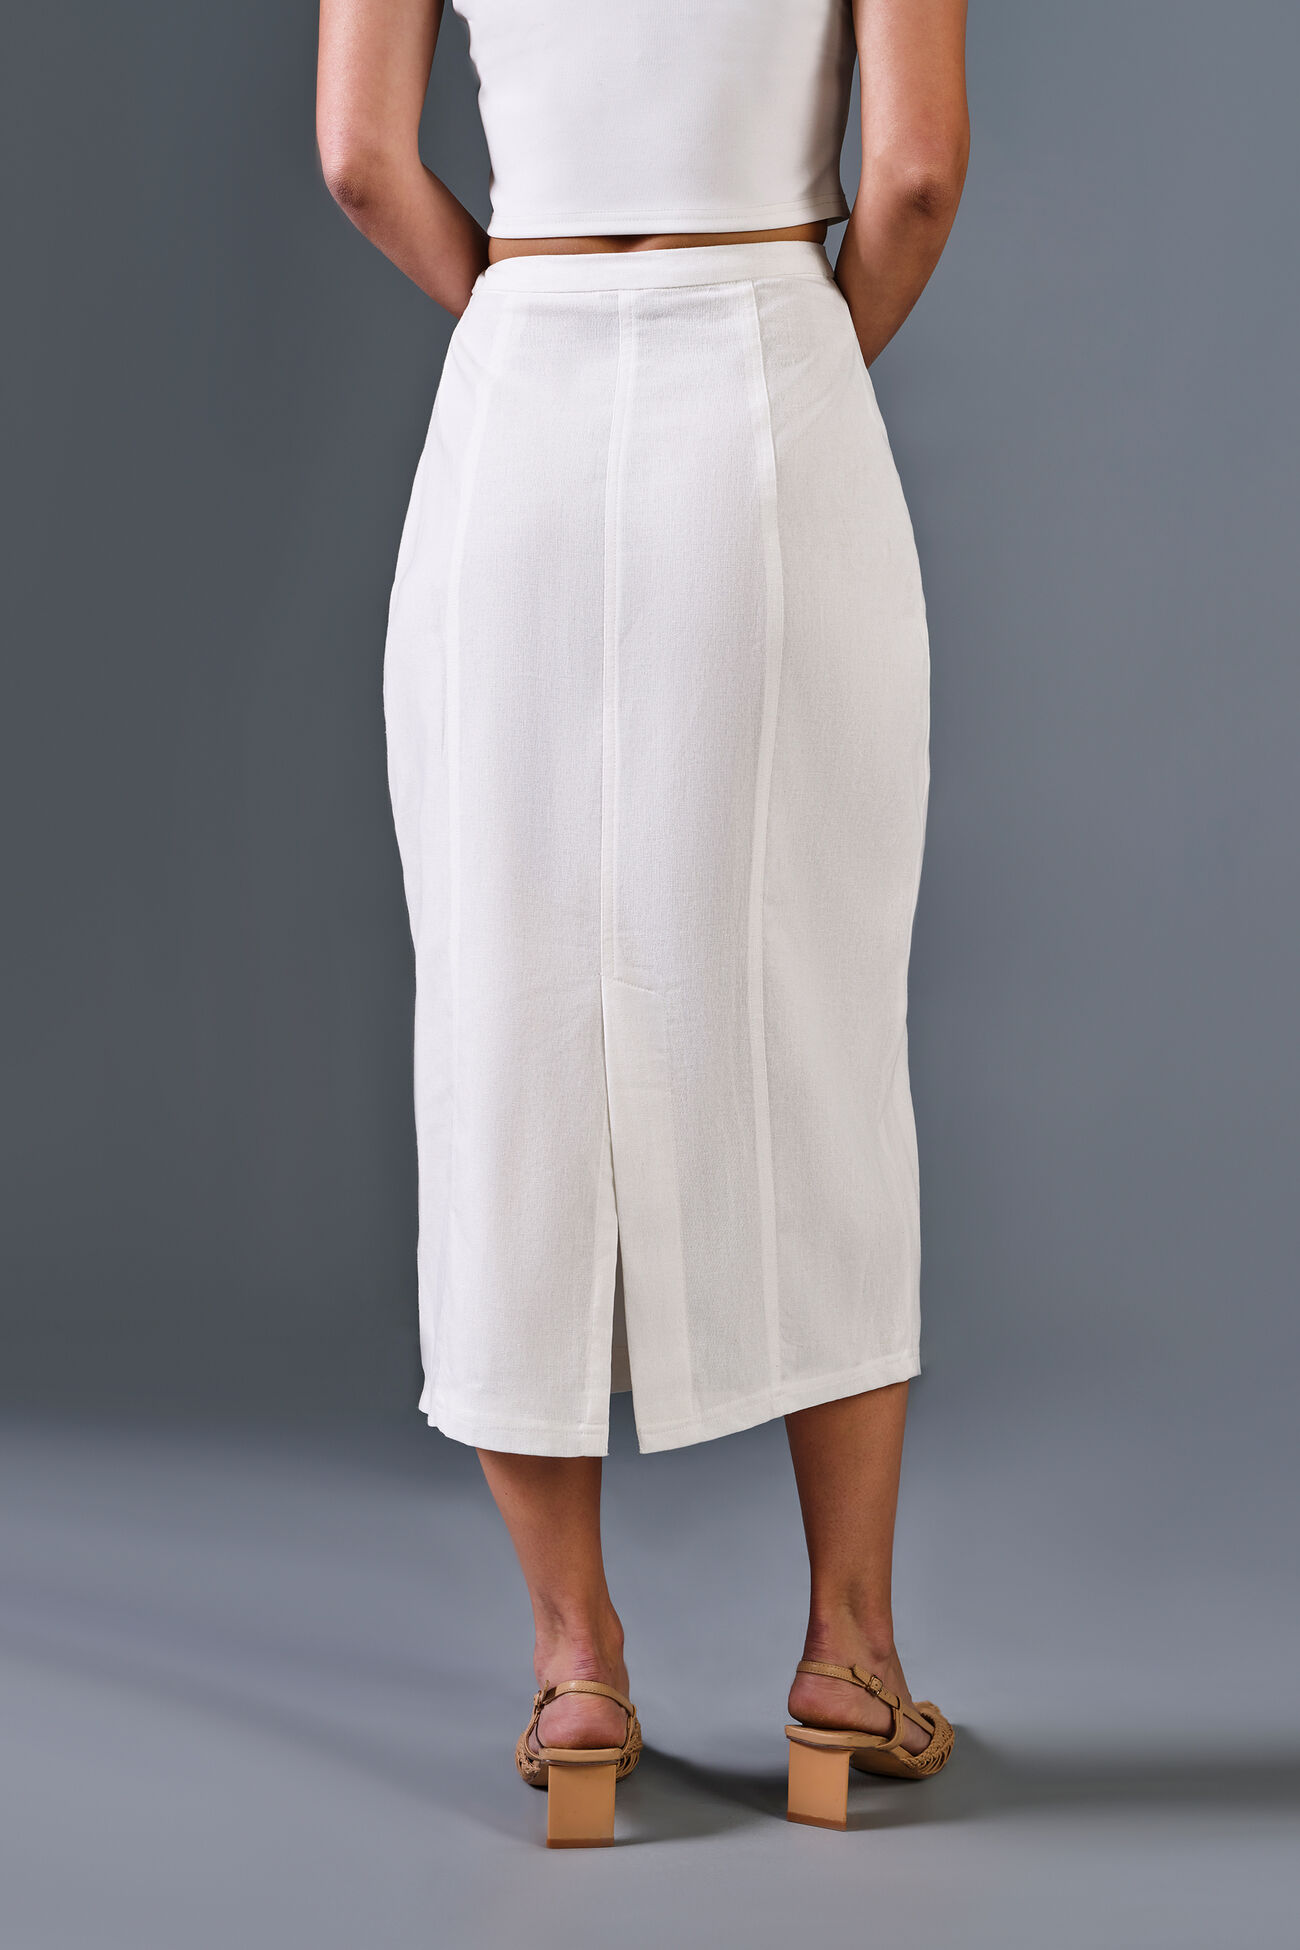 Calma Viscose Blend Skirt, White, image 3